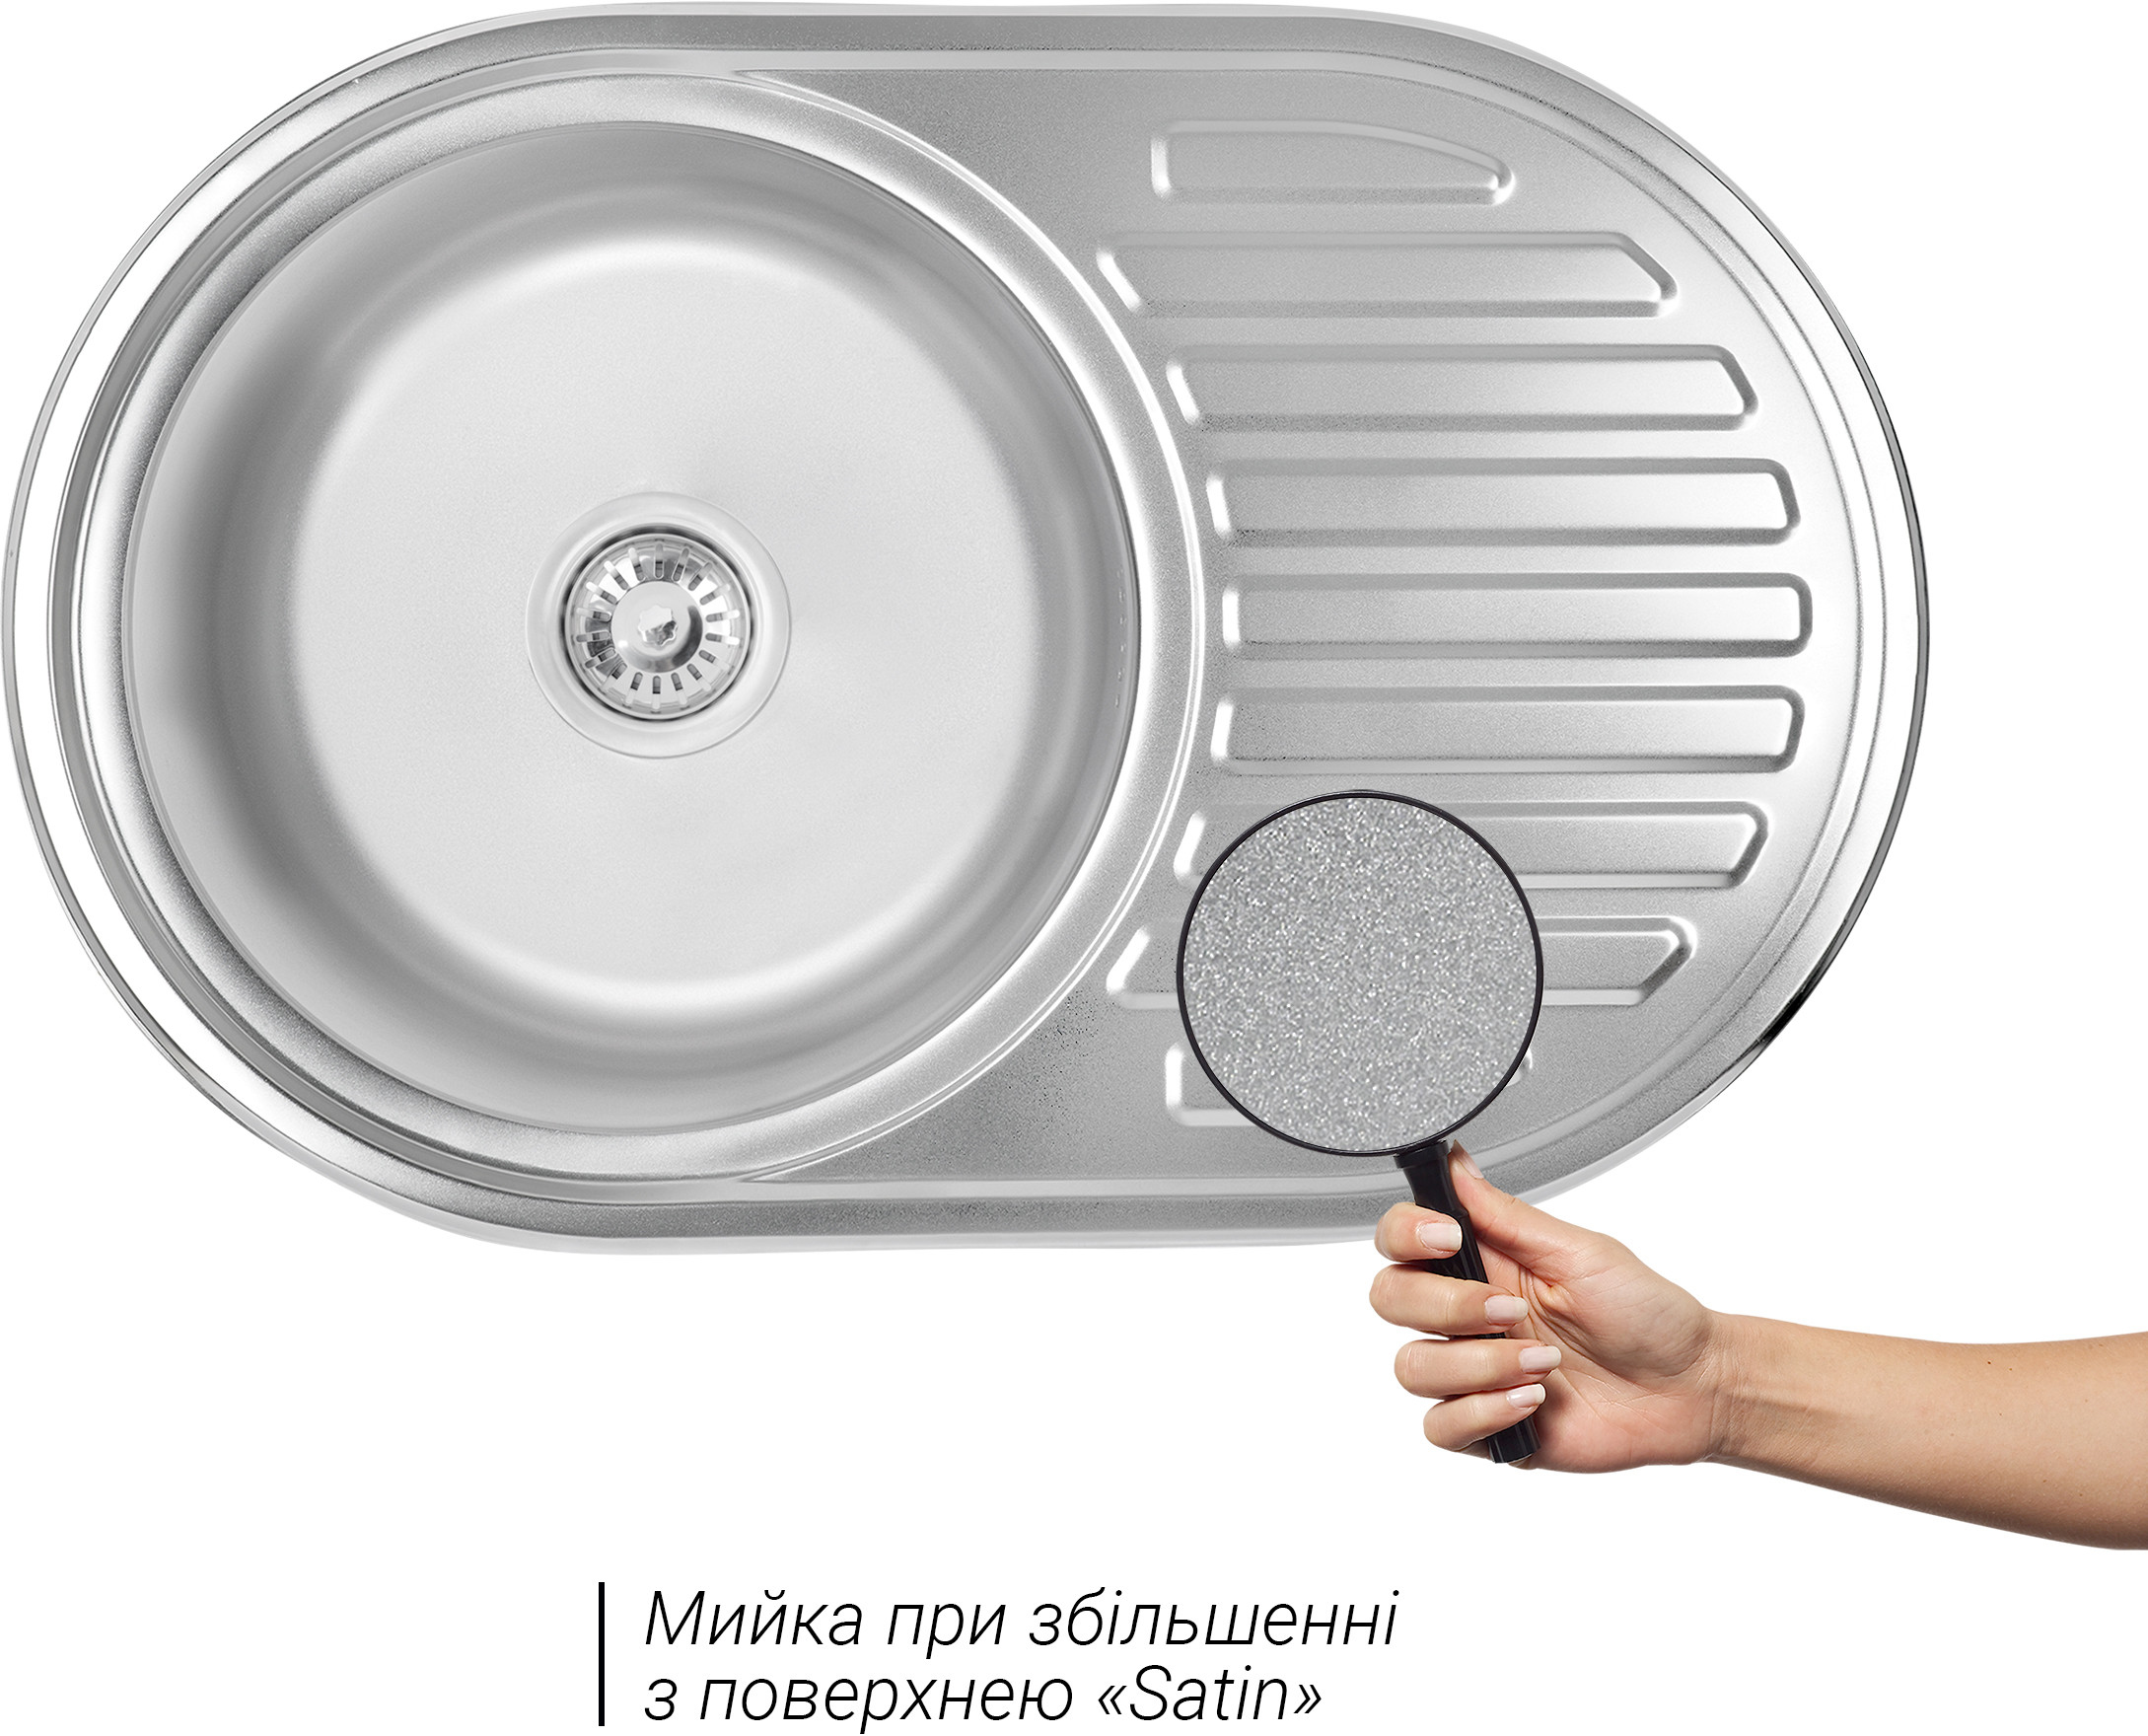 Кухонная мойка Lidz 7750 0,8 мм Satin (LIDZ7750SAT) цена 1489.00 грн - фотография 2